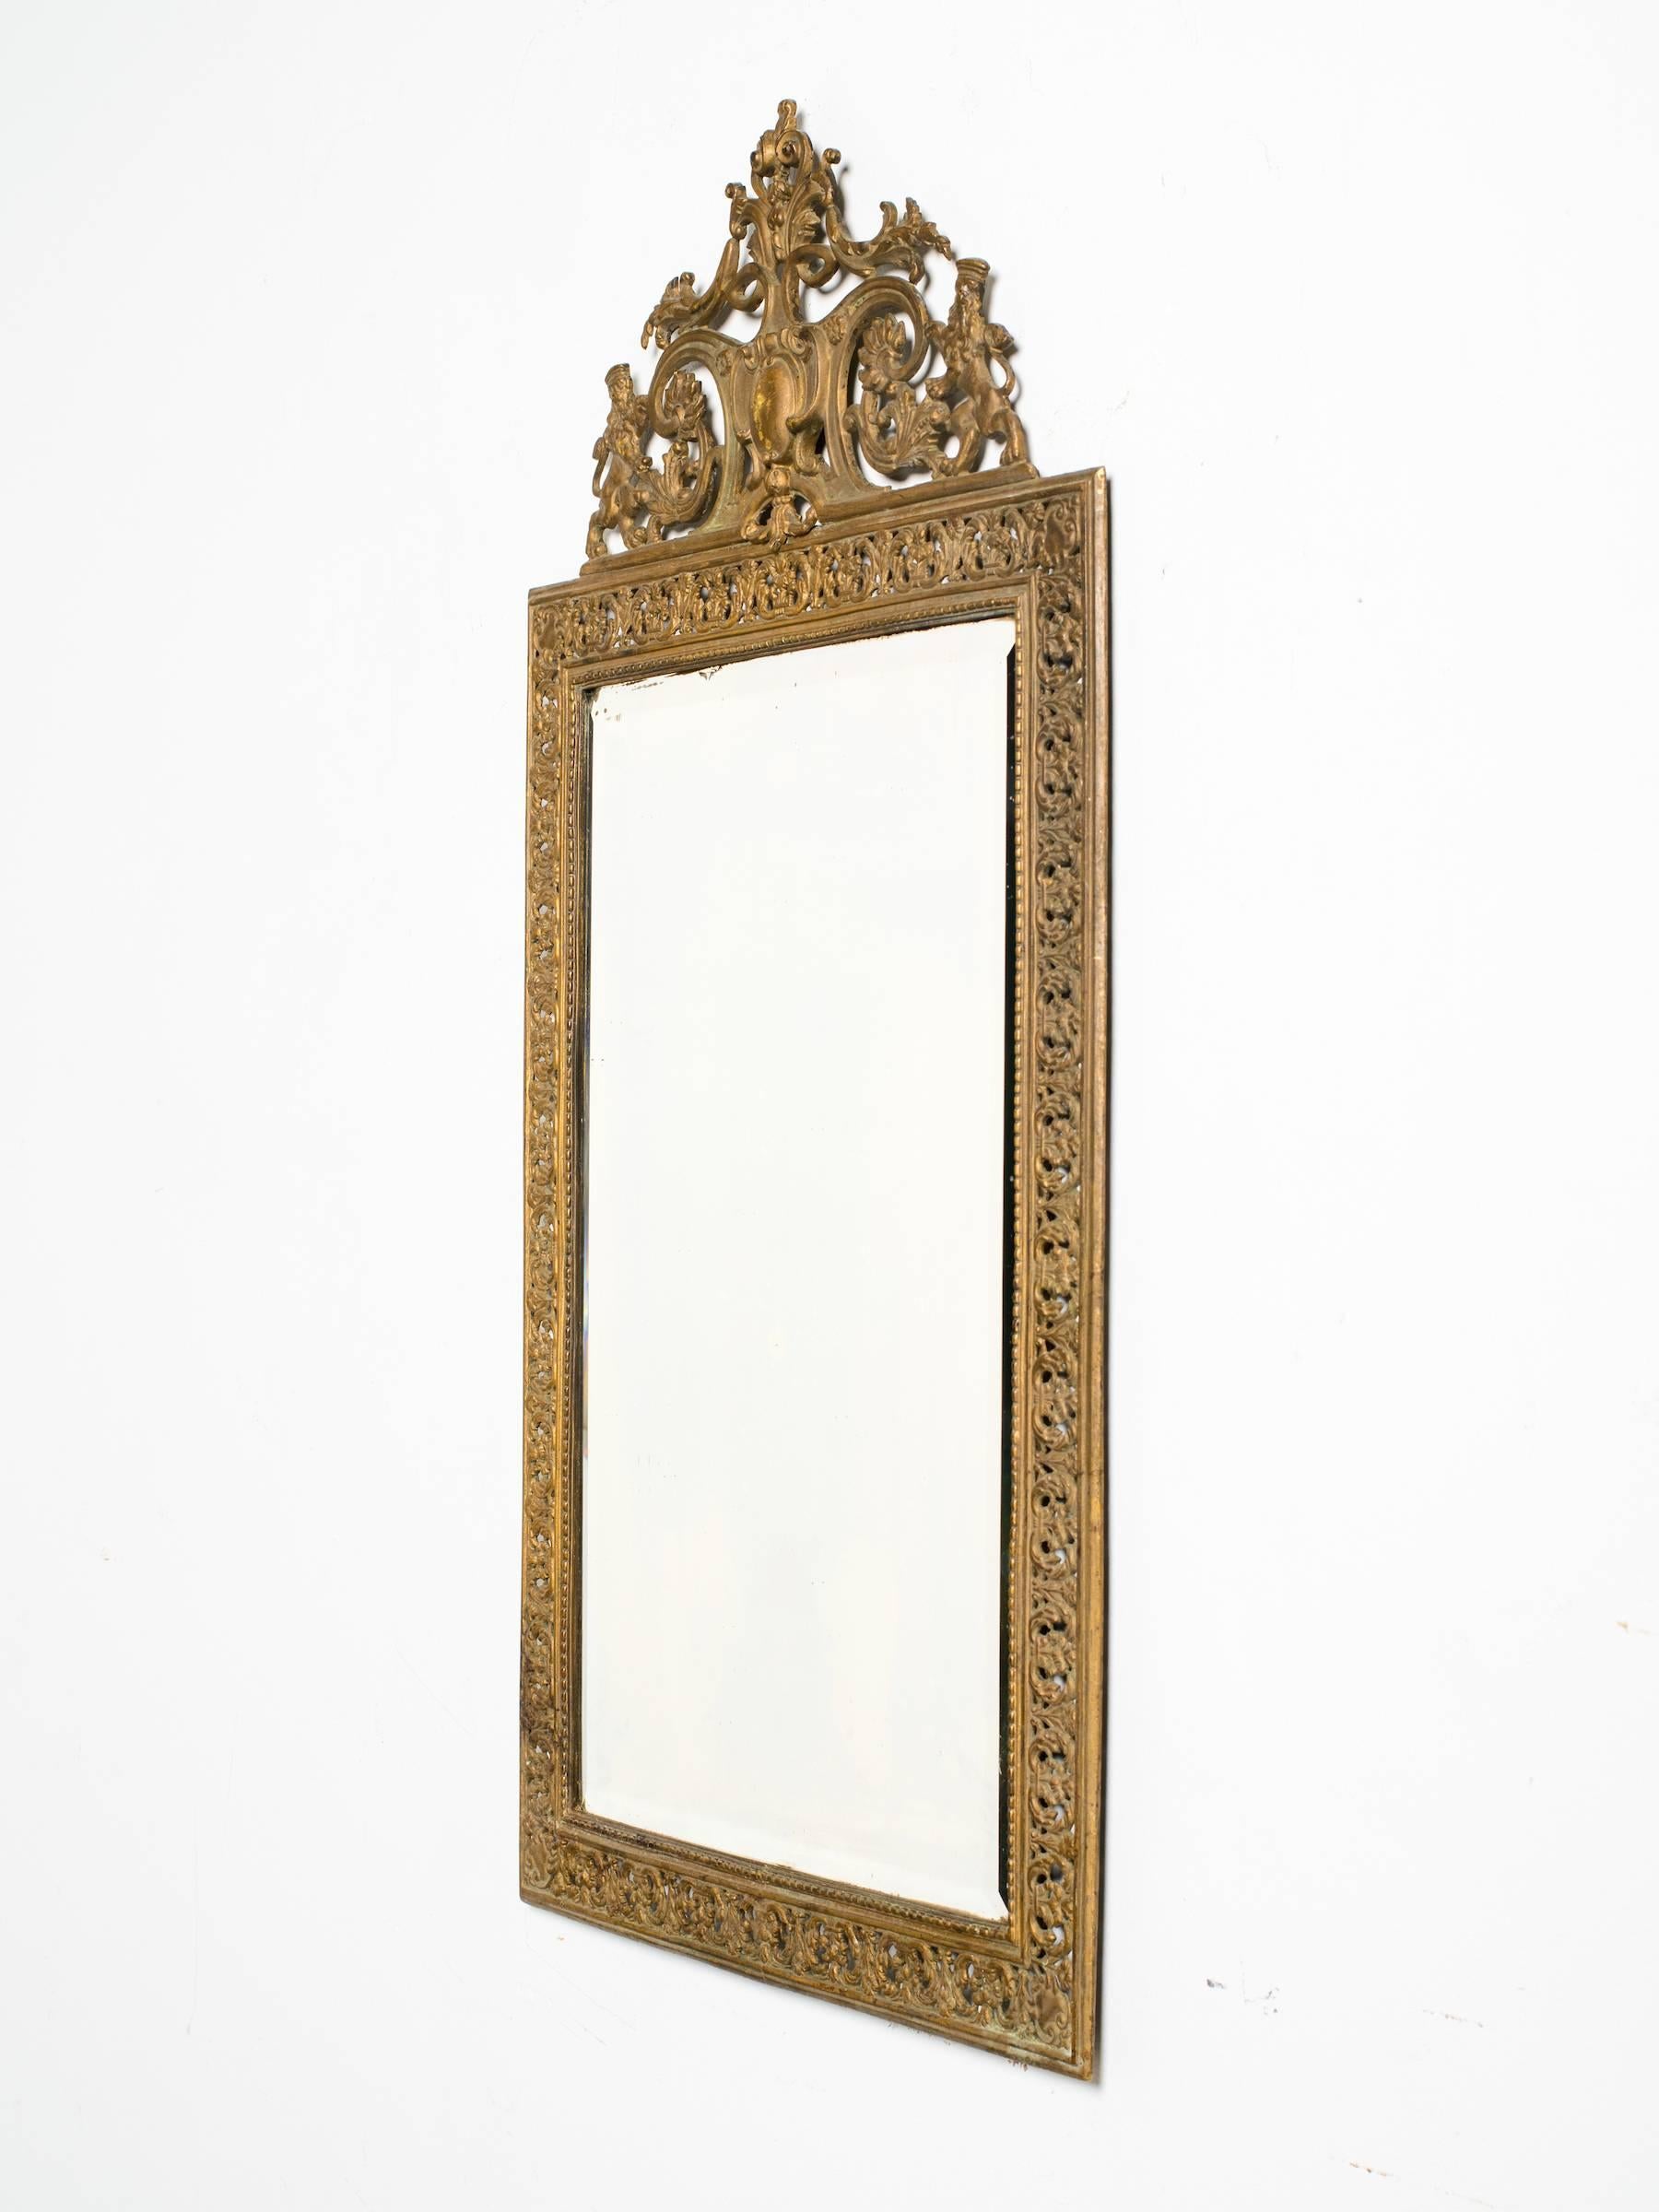 19th century English brass mirror.